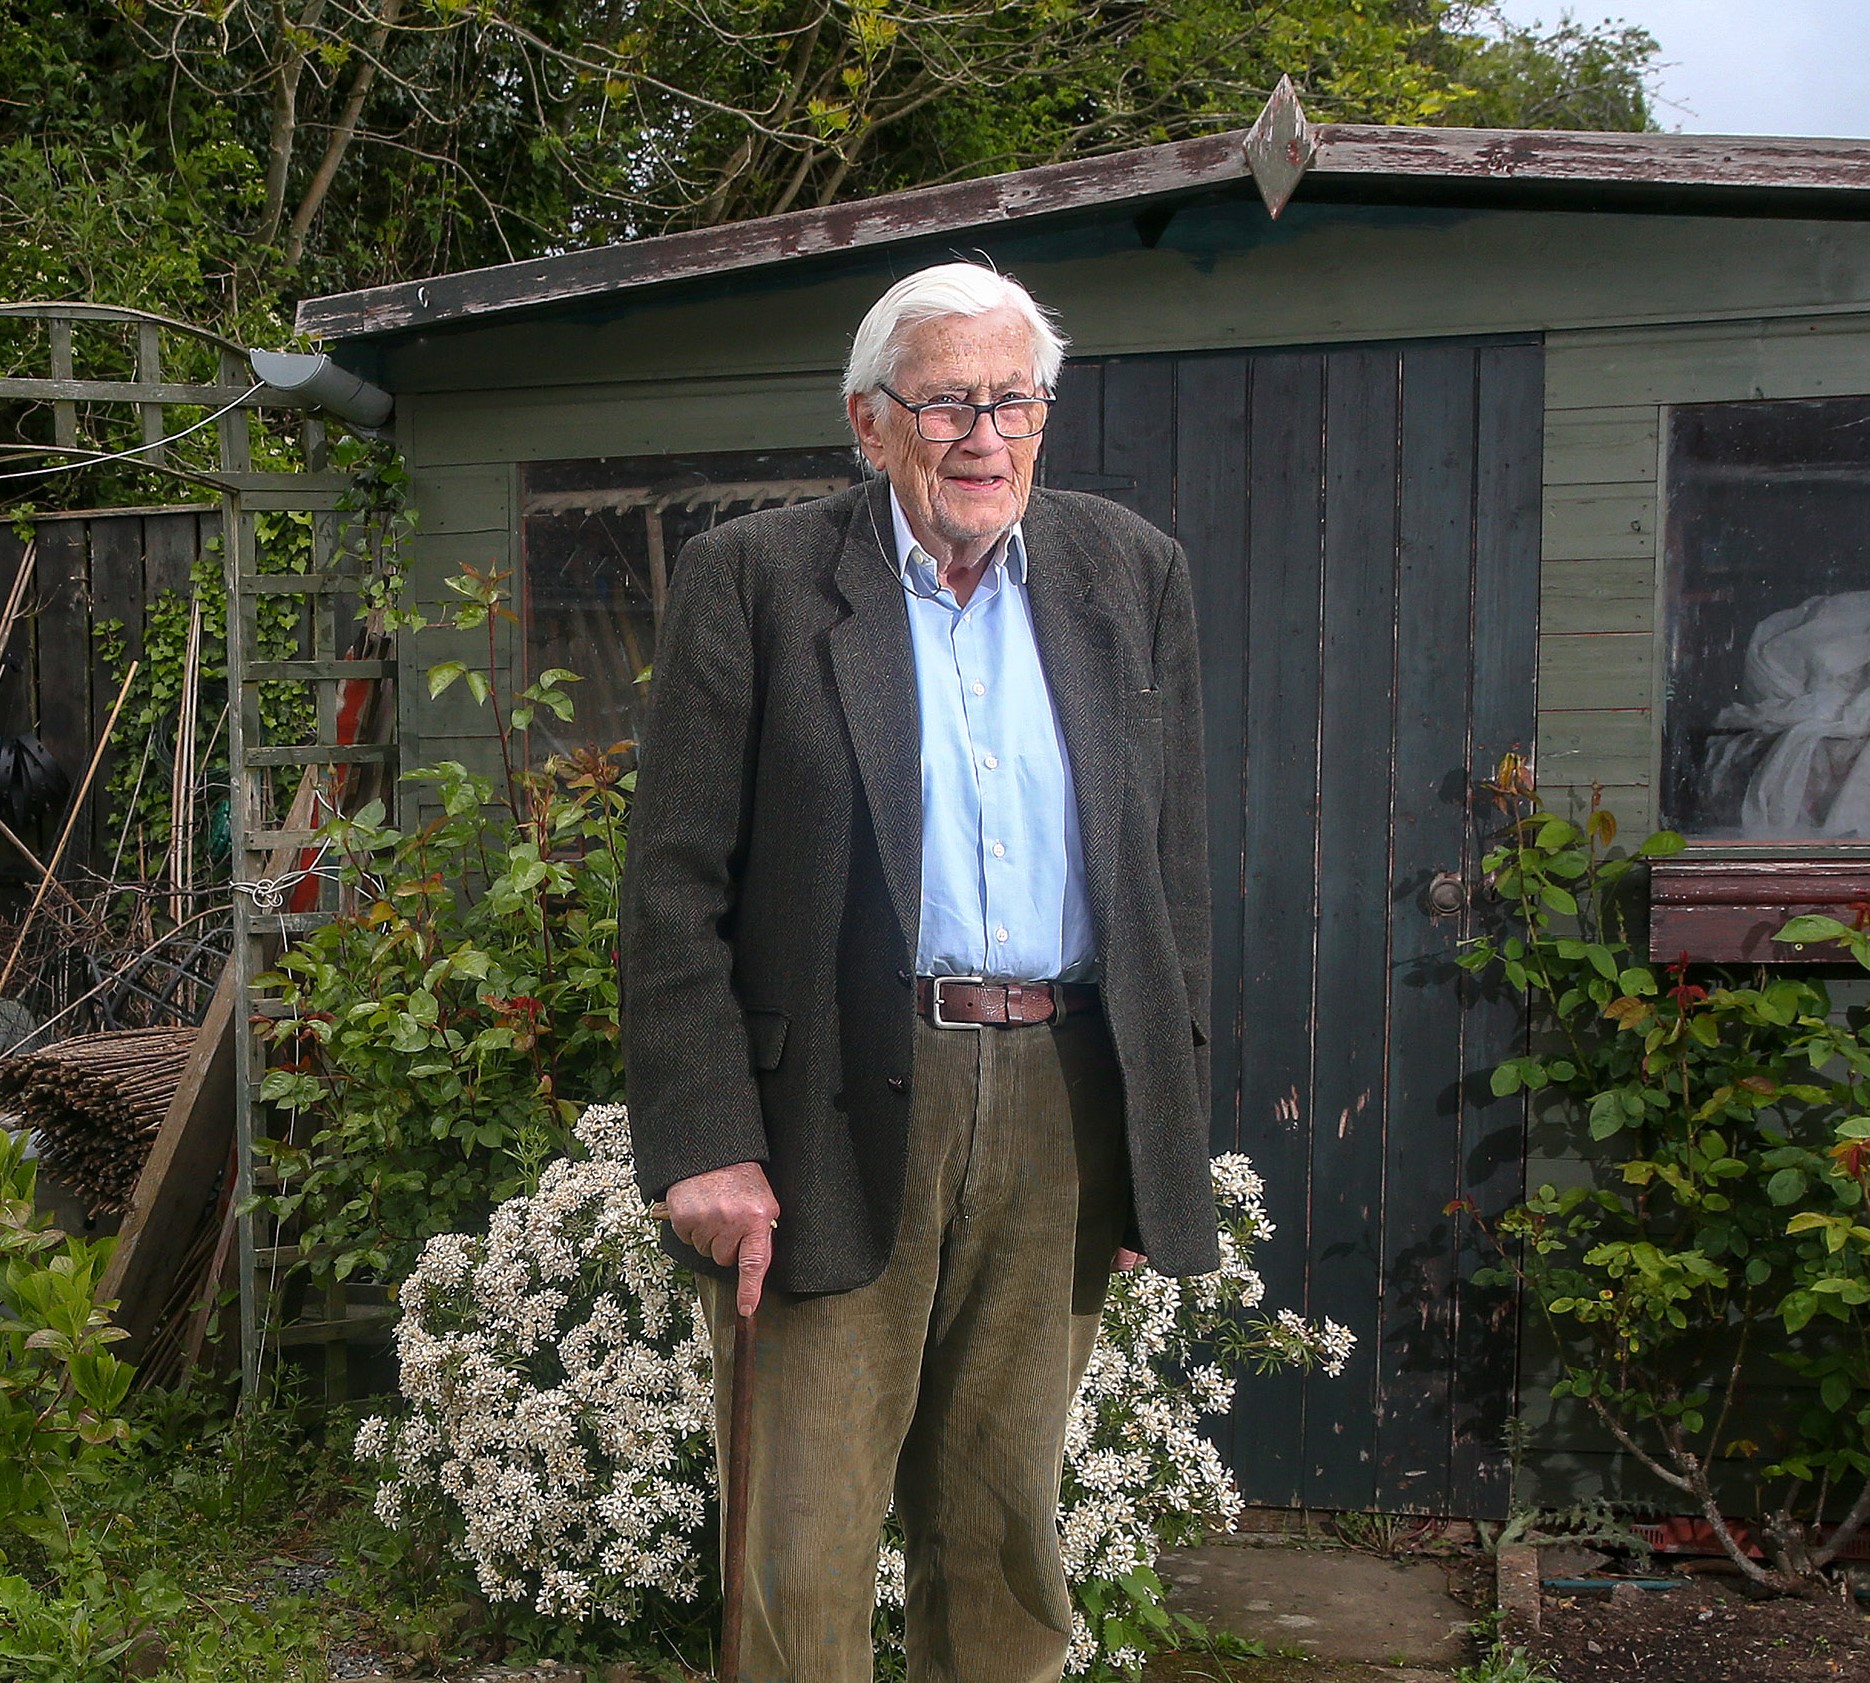 Colour full-length photograph of Seamus Mallon, a former Member of Seanad Éireann, standing in a garden.